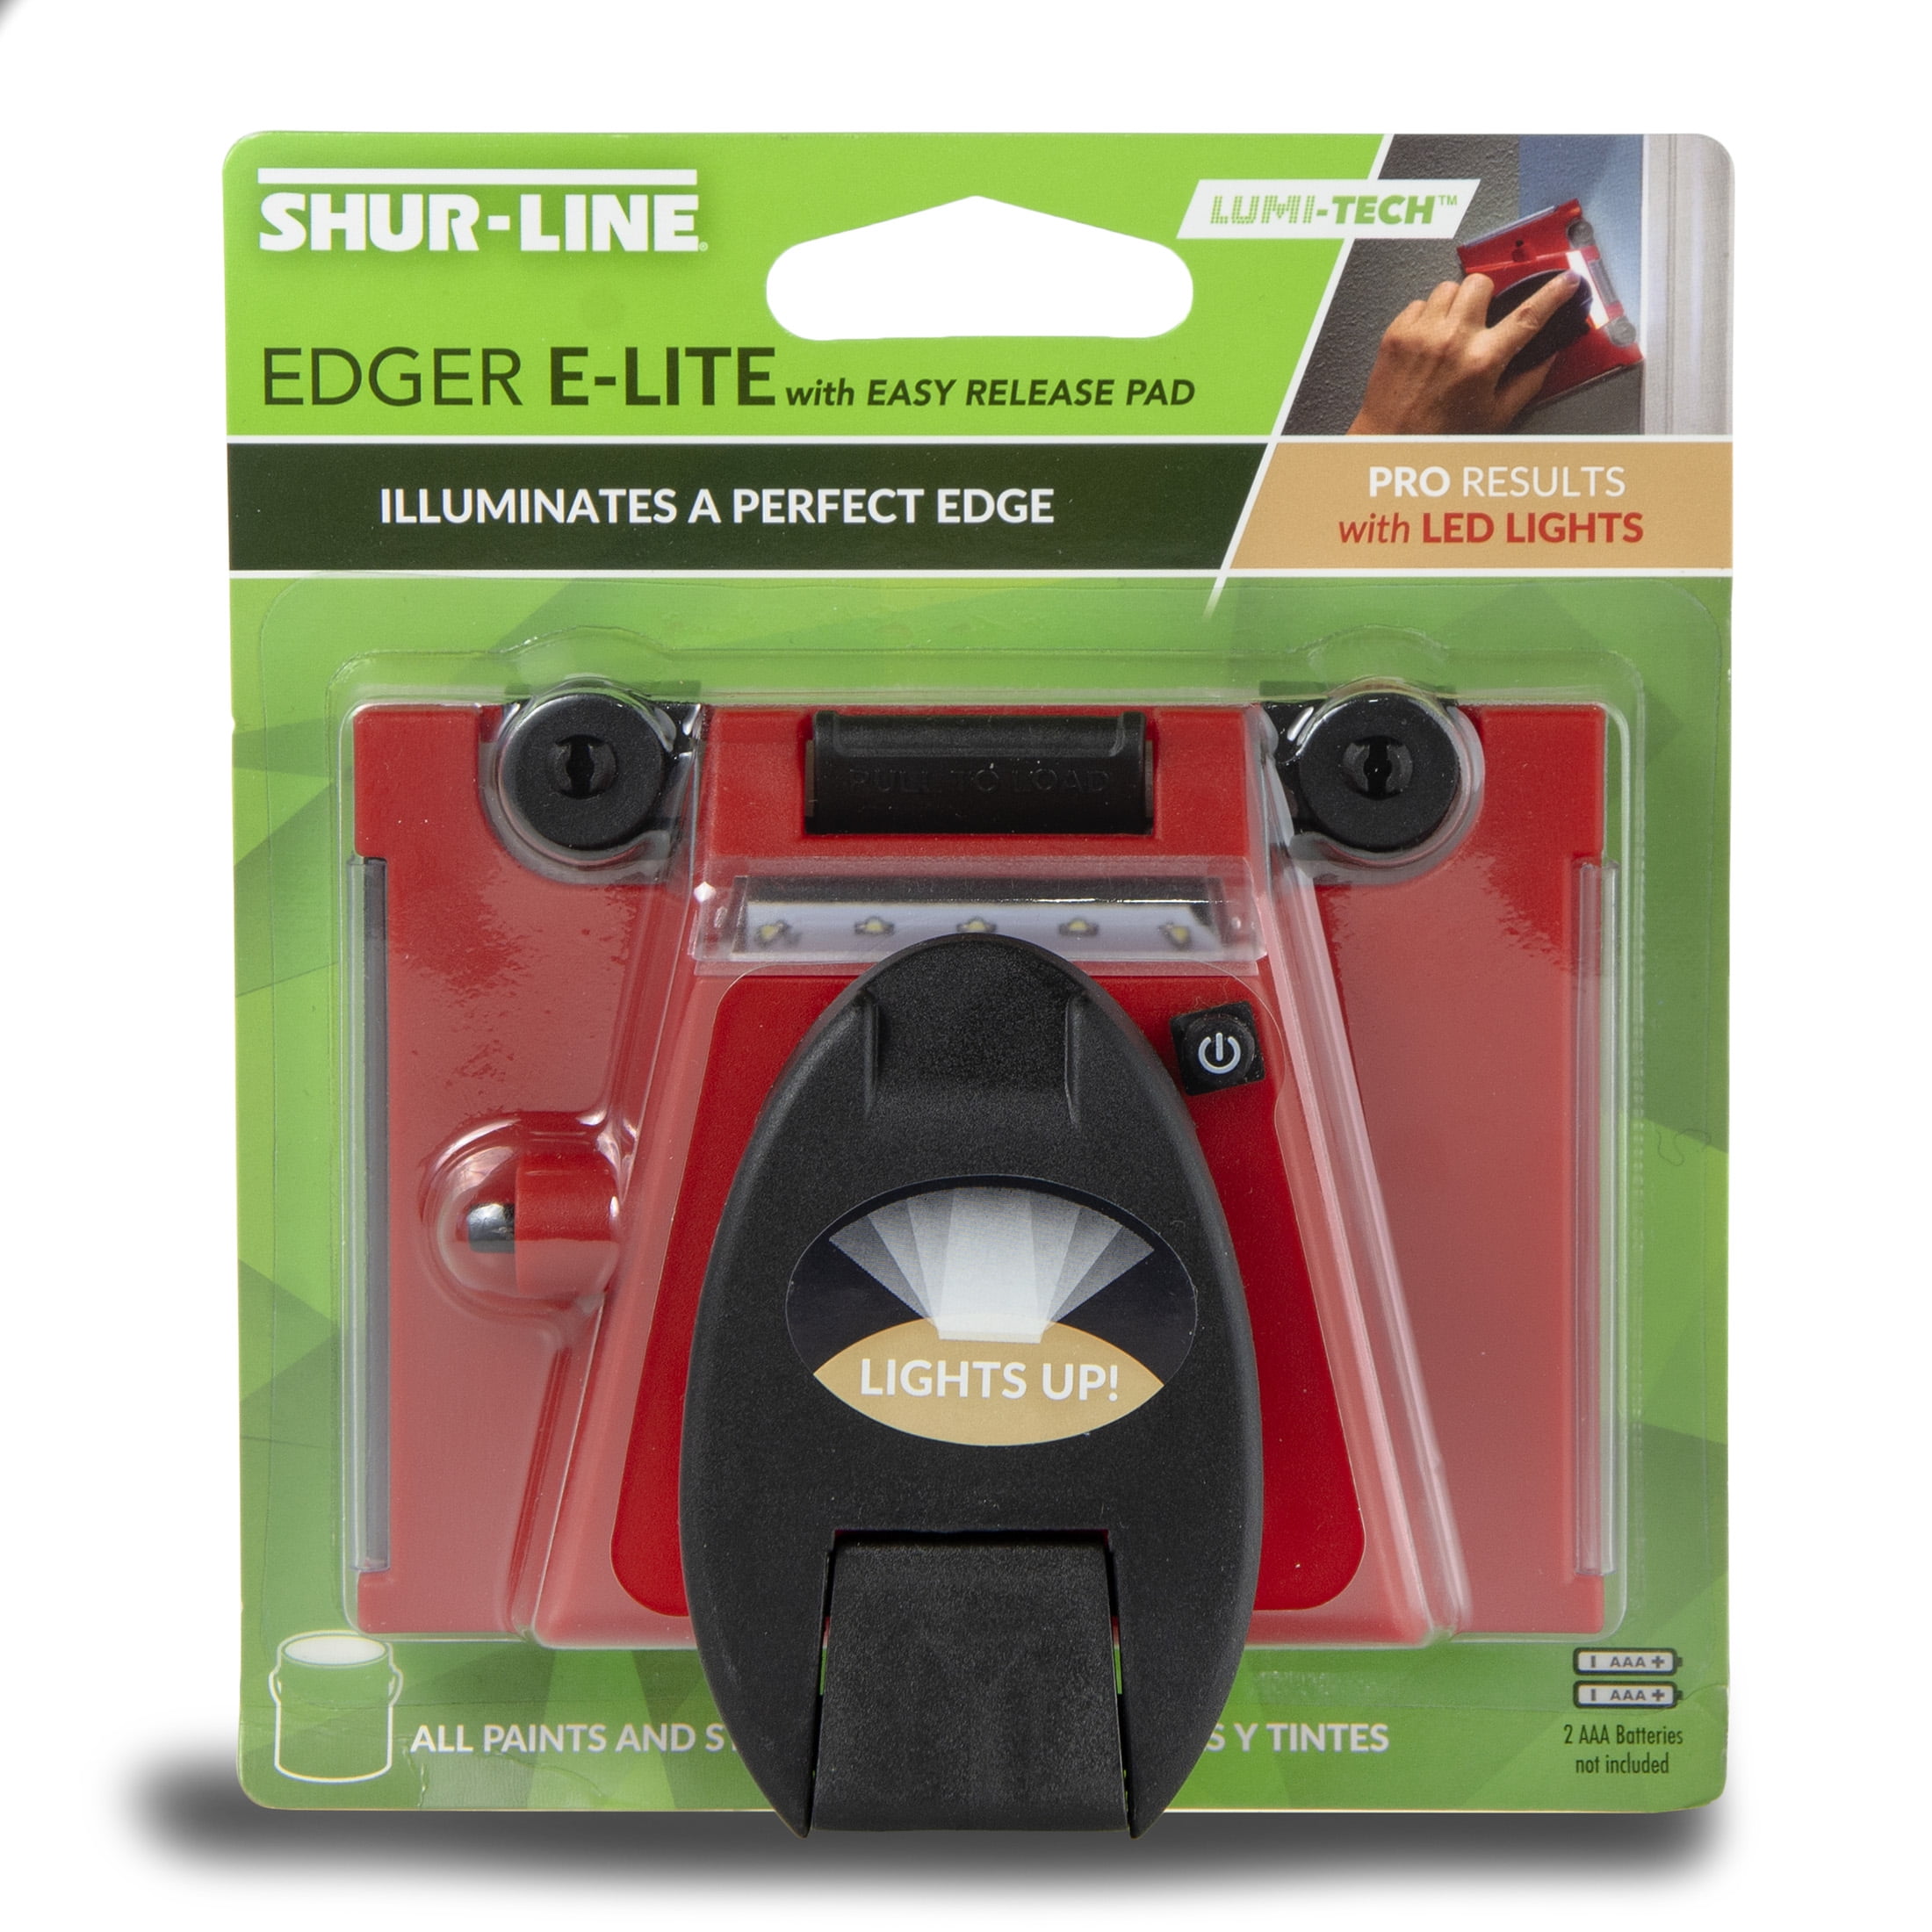 Shur-Line Lumi-Tech LED E-Lite Paint Edger with Easy Release Pad